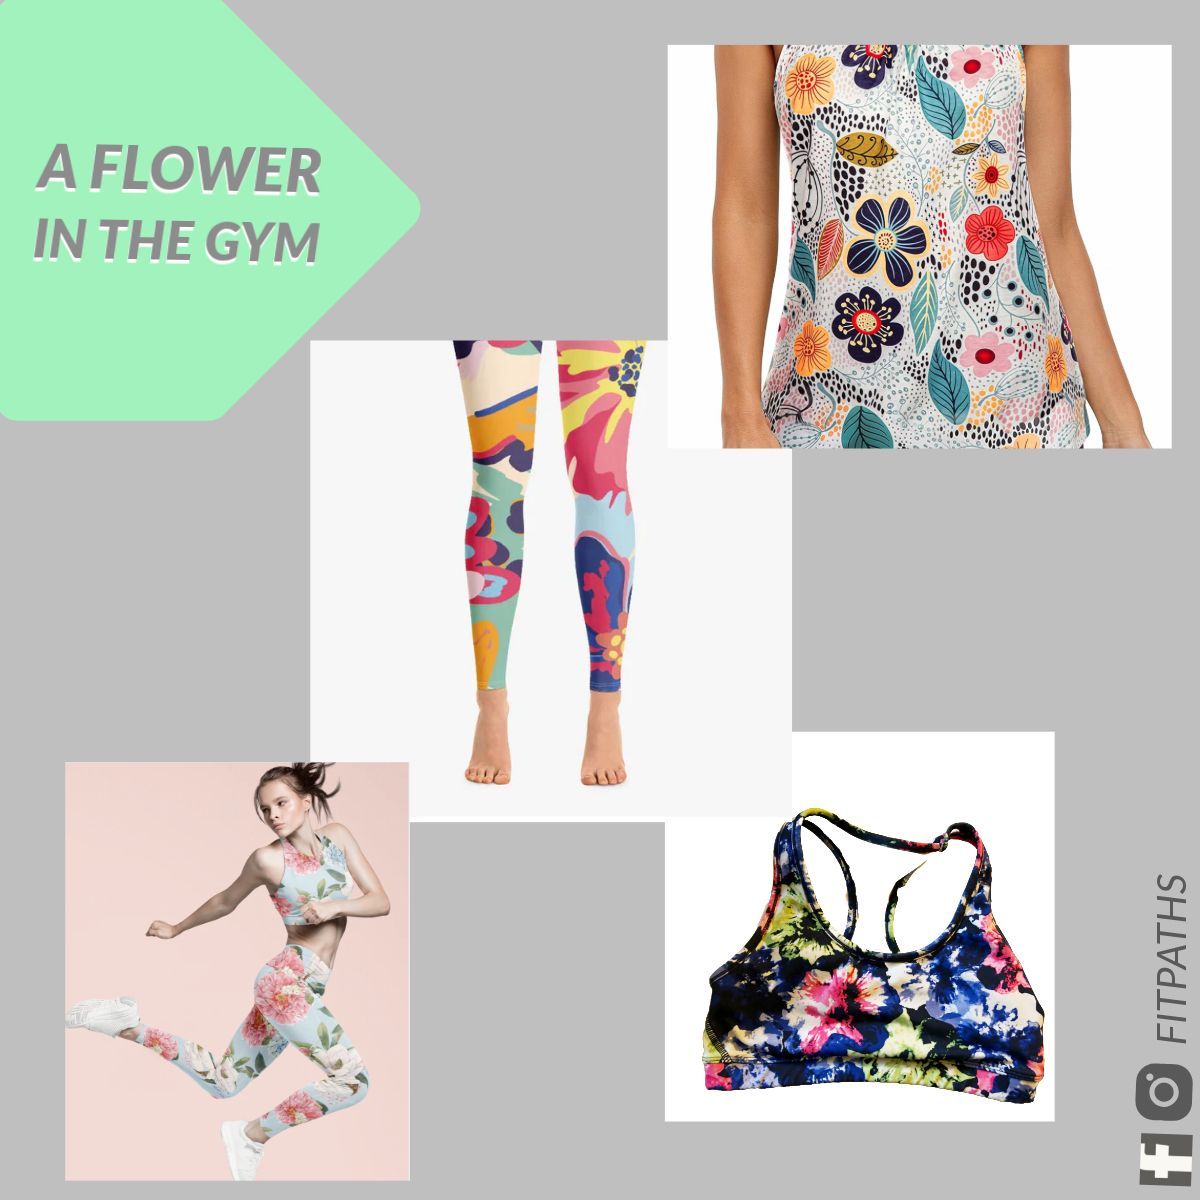 #fashionfriday are you taking your #flowerpower to the #gym  this spring? @satori_designs_studio @looneylegs
#fitnessfashion